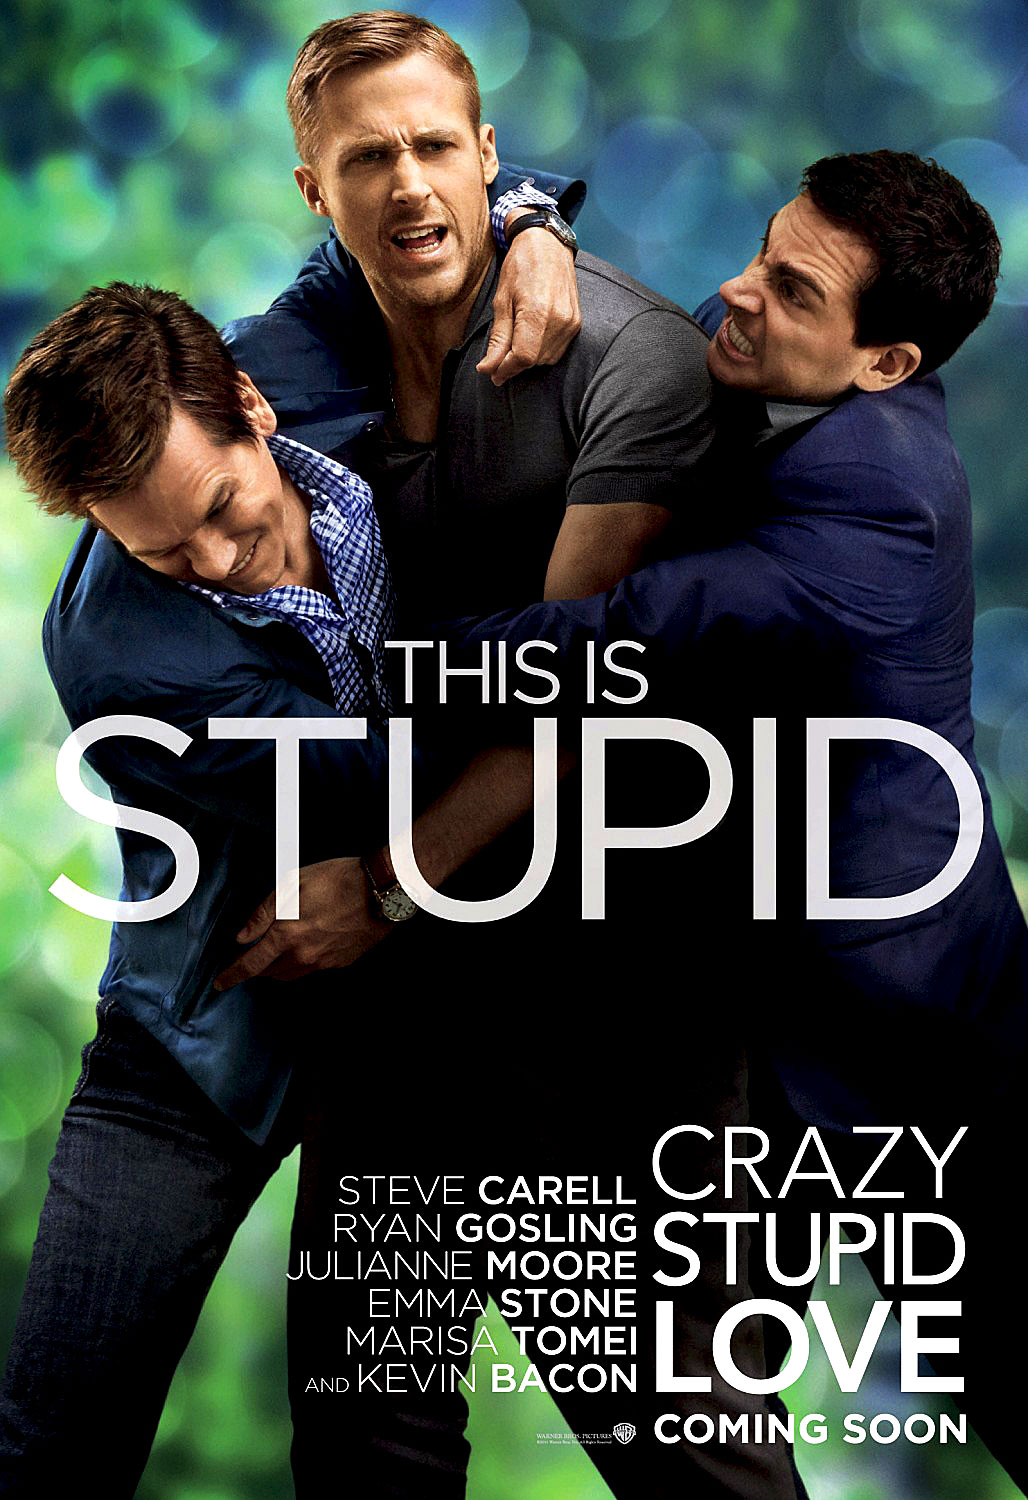 Steve Carell Talks About Crazy, Stupid, Love - WSJ